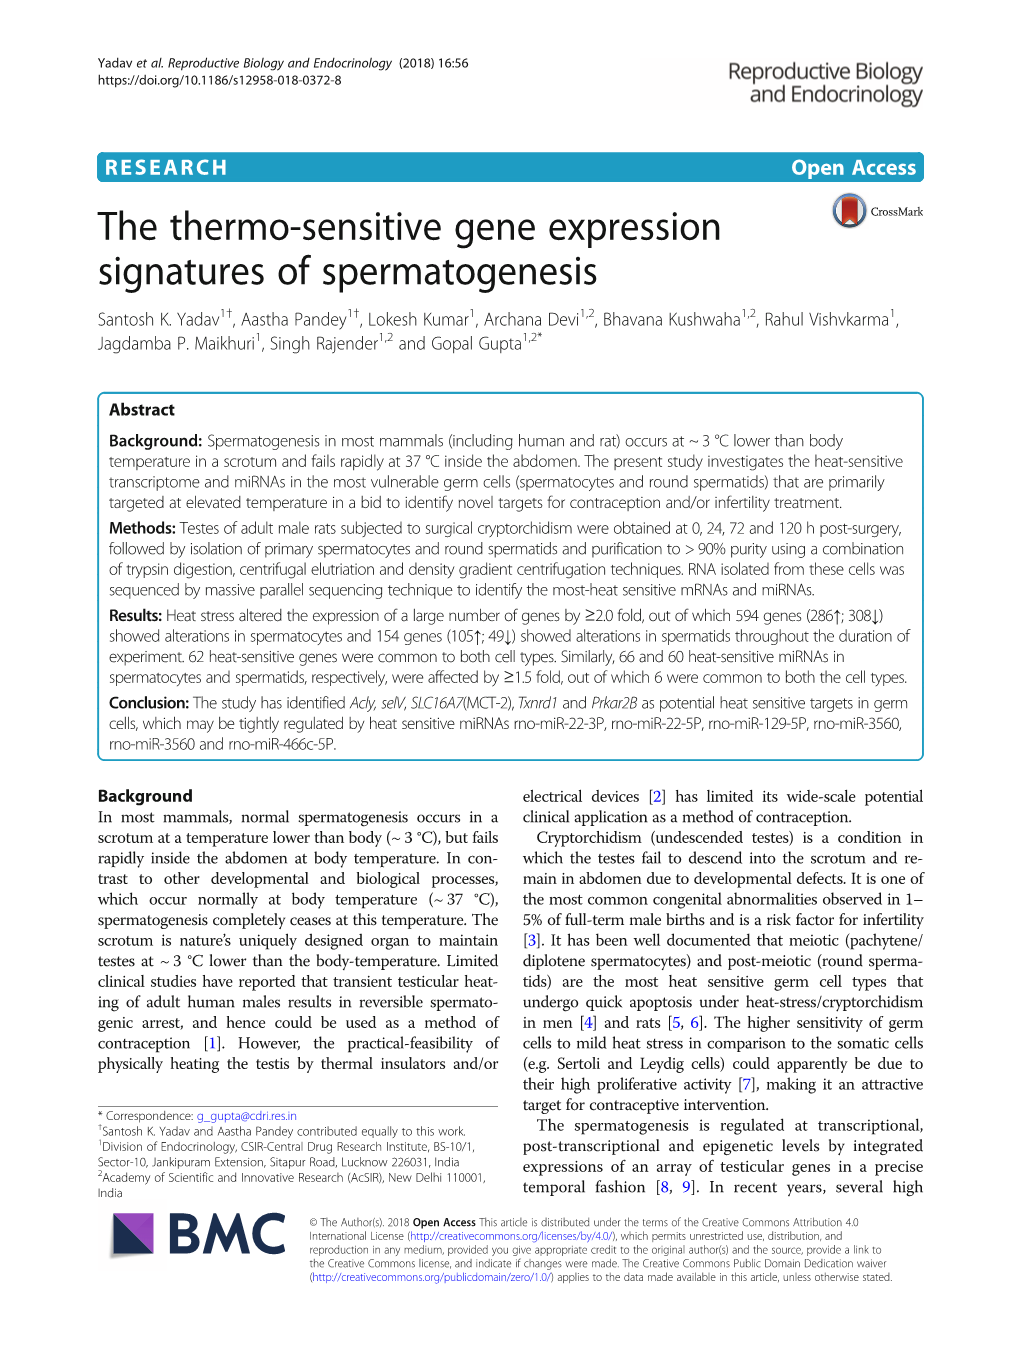 The Thermo-Sensitive Gene Expression Signatures of Spermatogenesis Santosh K